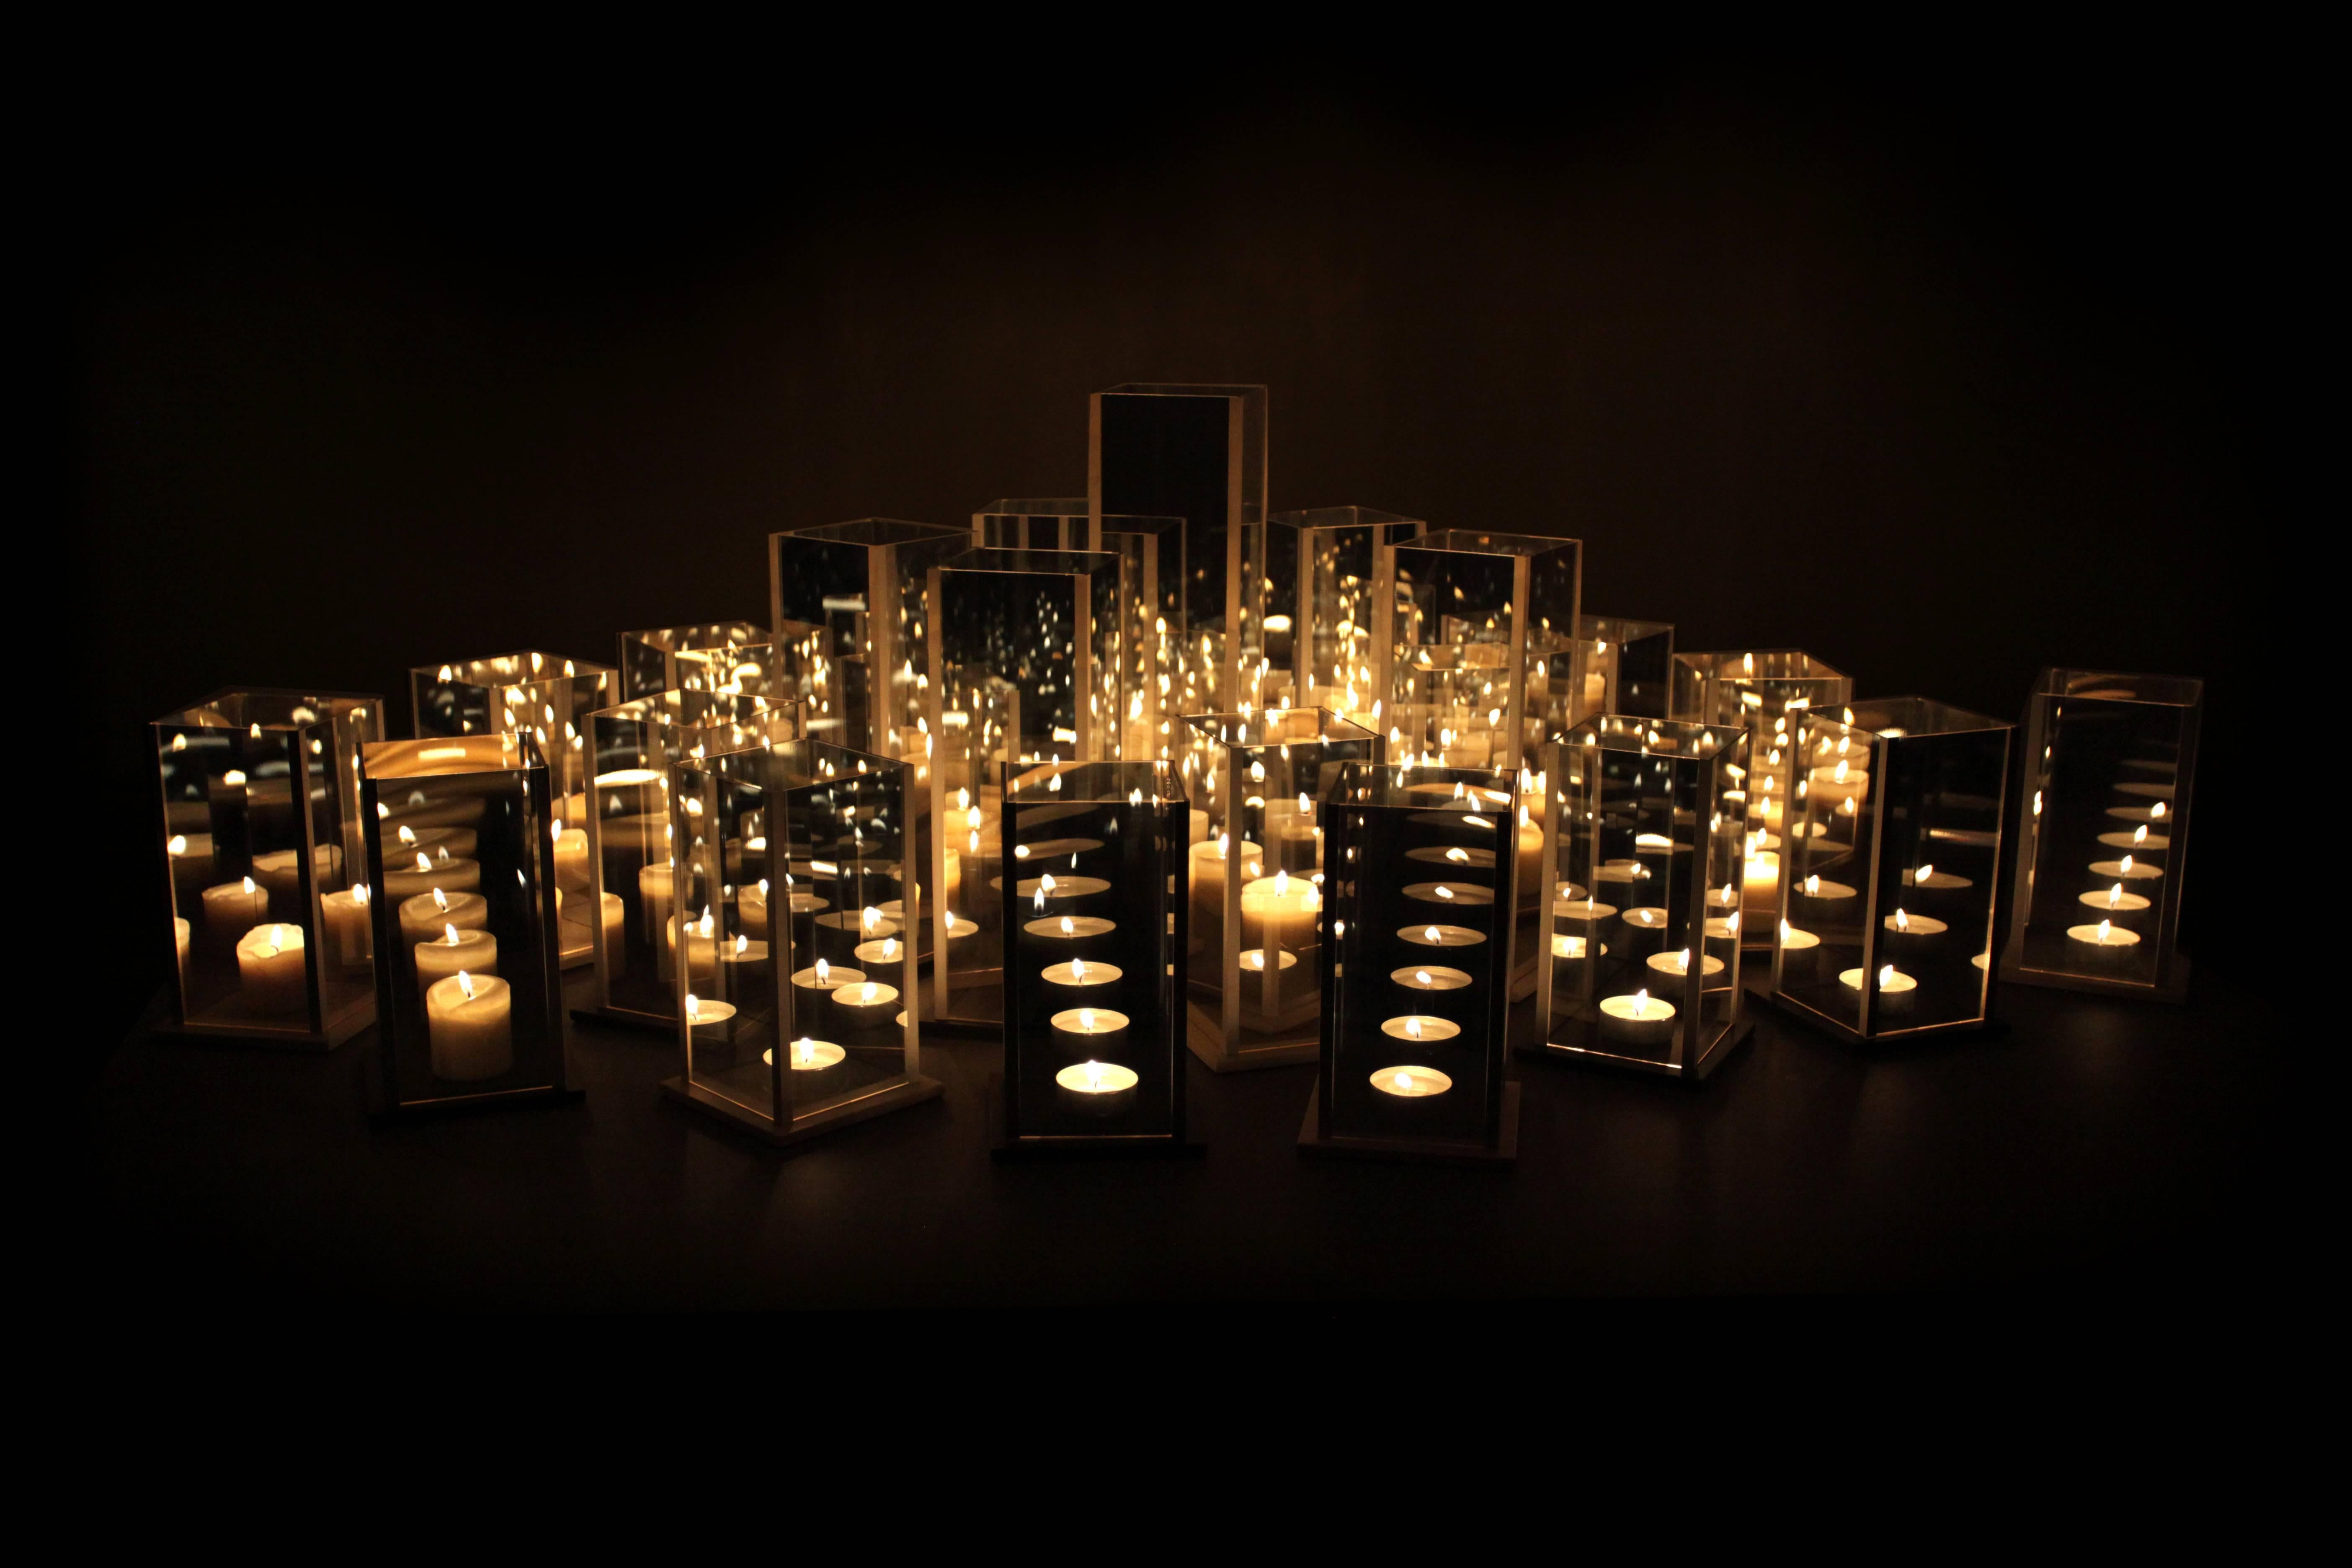 Set of Kaleido20, candleholders, Handmade Work by Arturo Erbsman
Signed by Arturo Erbsman
Dimensions:
- Small 25 x 15 x 15 cm.
- Medium 37 x15 x 15 cm.
- Big 49 x 15 x 15 cm. 
Materials: Acrylic mirrors

Kaleidoscopic one-way glass photophores that